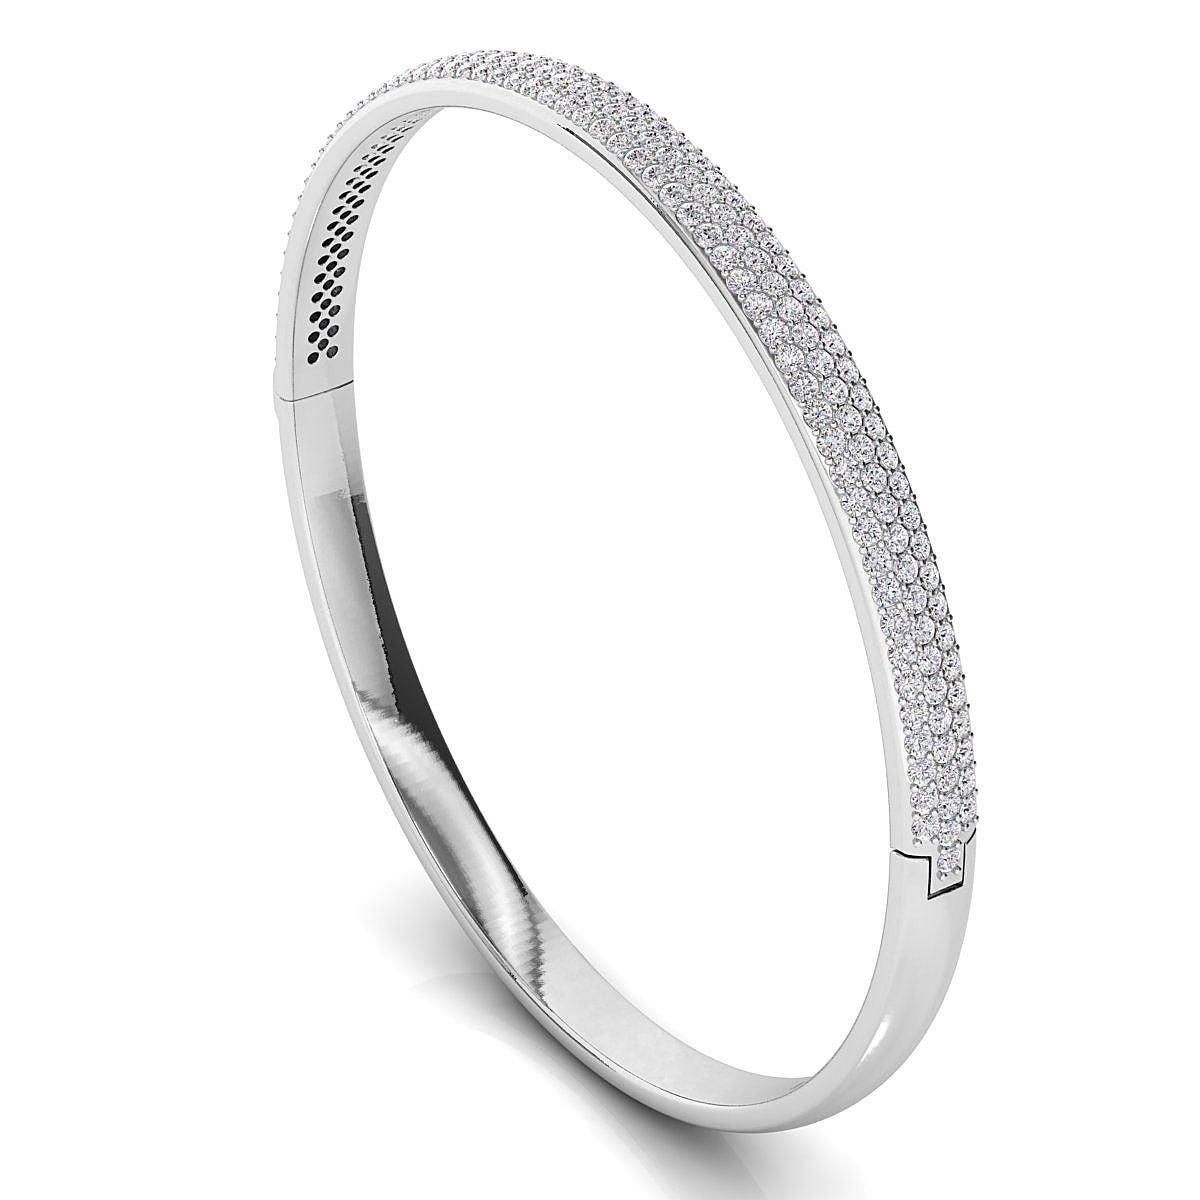 Antique Silver Plated Adjustable Diamond Bracelet For Women Girls - Silver  Shine - 3177990